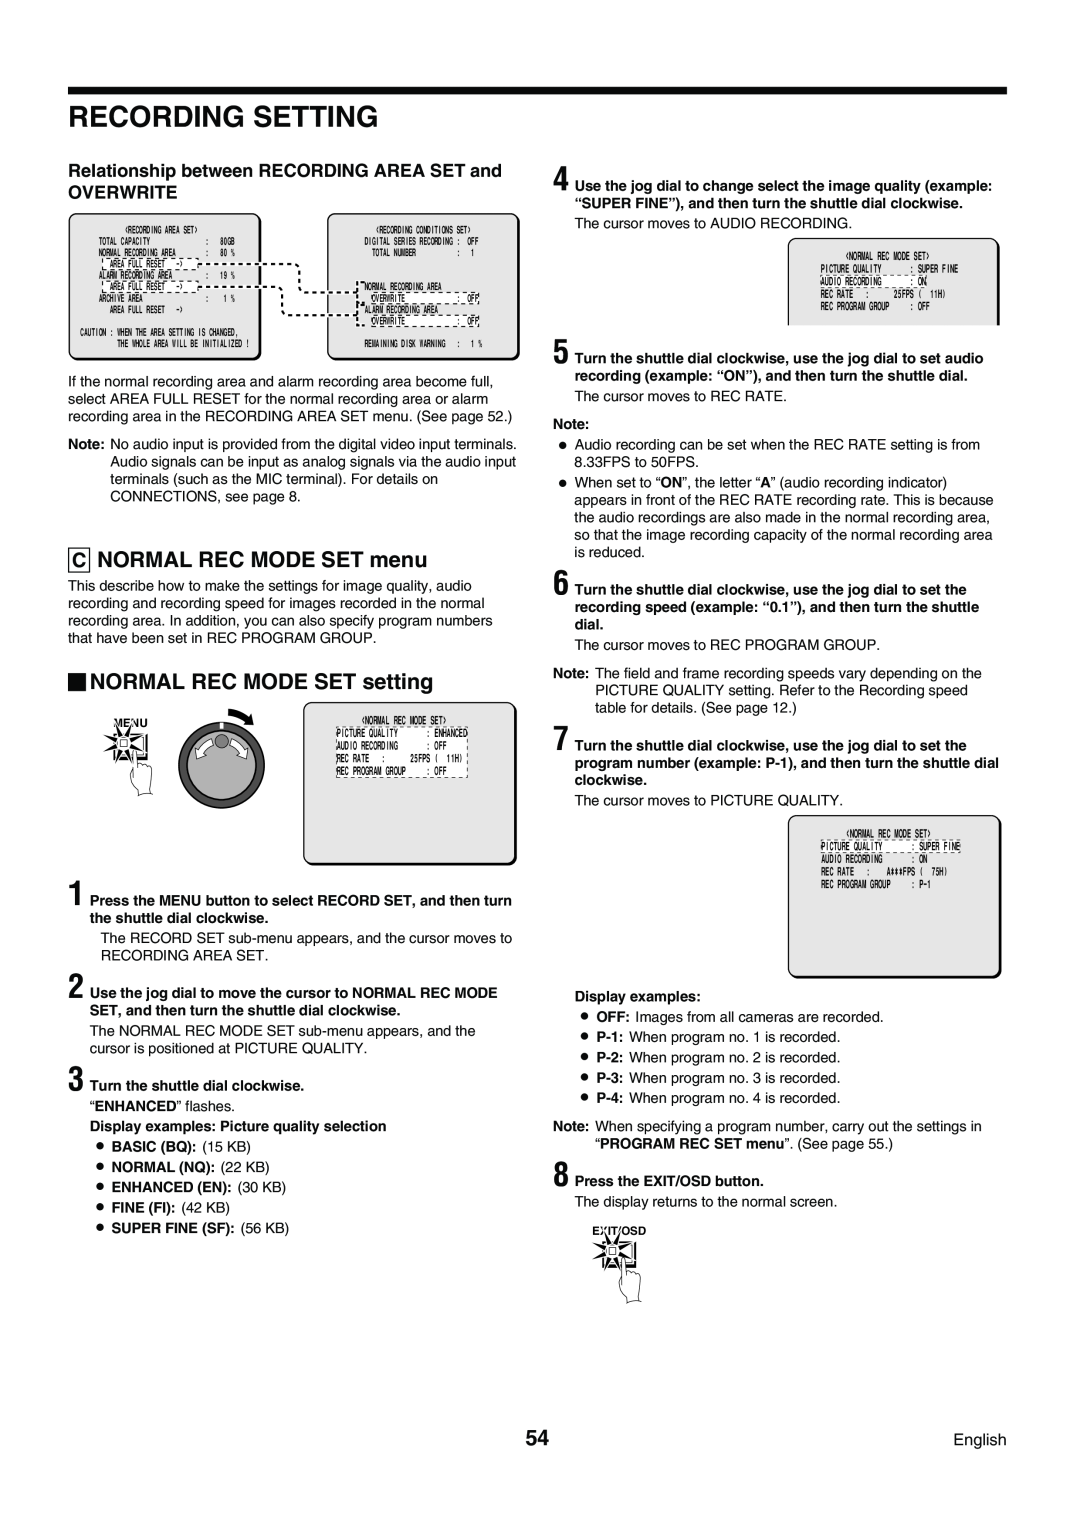 Sanyo DSR-3009P instruction manual C NORMAL REC MODE SET menu, NORMAL REC MODE SET setting, Recording Setting 